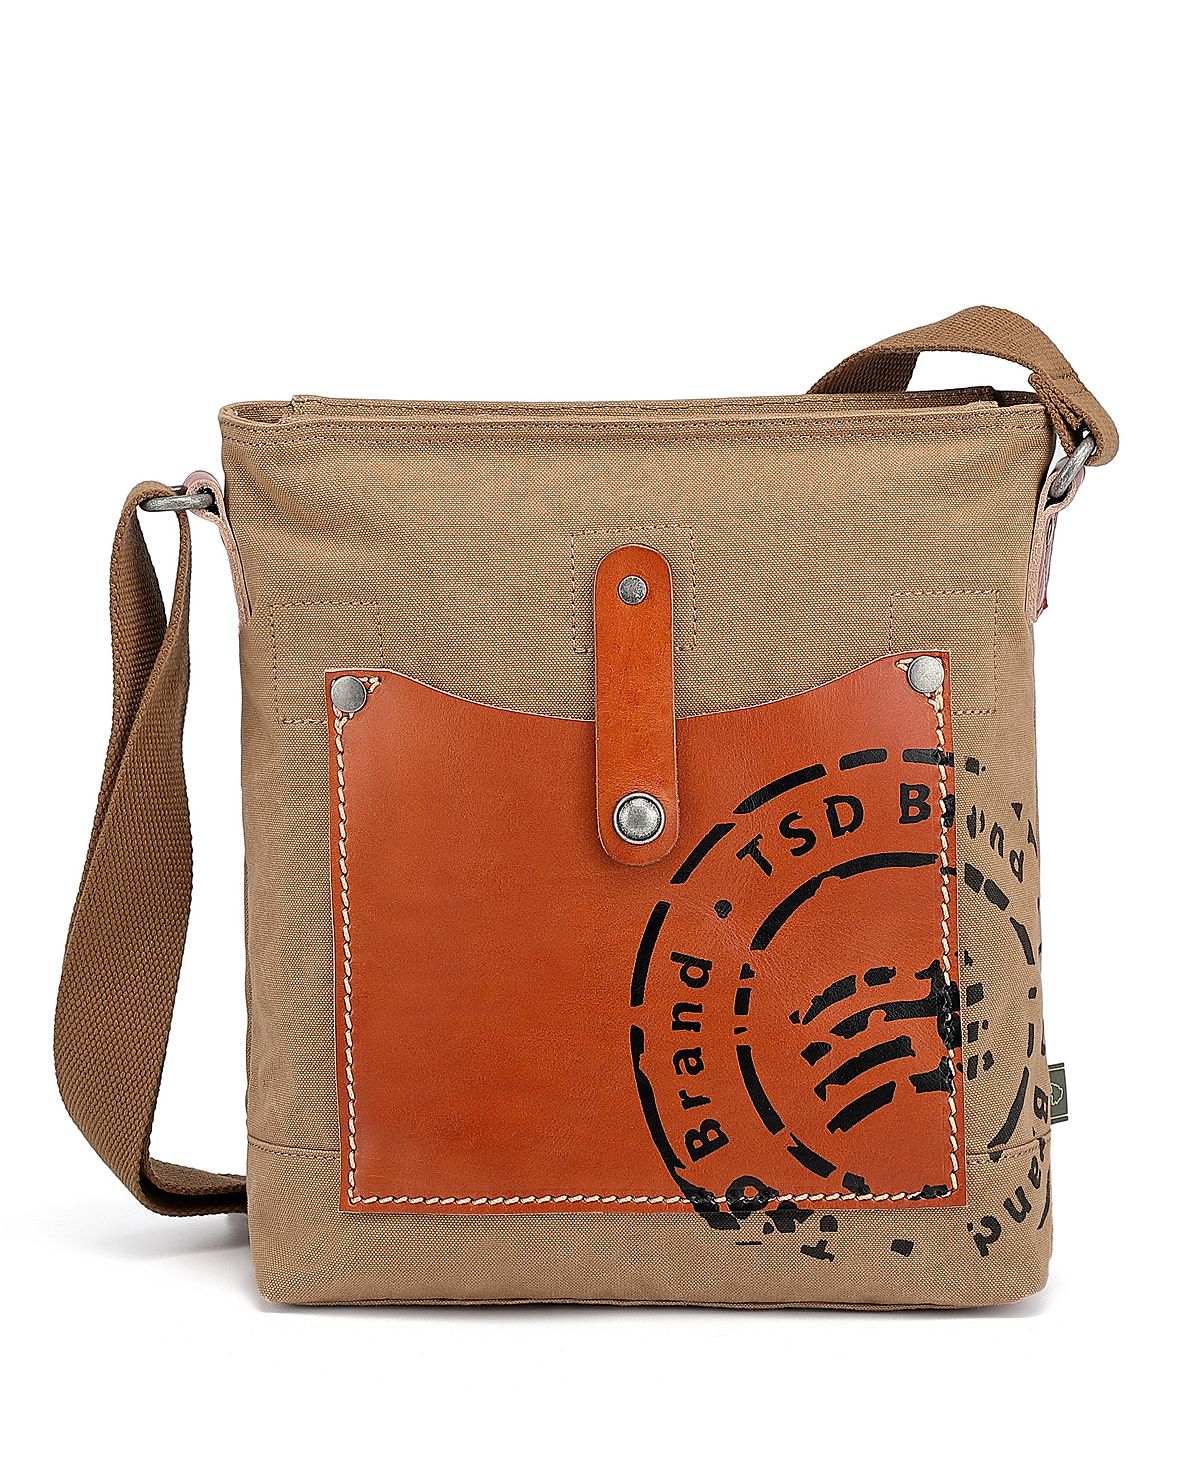 Холщовая сумка через плечо Super Horse TSD BRAND, коричневый холщовая сумка через плечо valley oak tsd brand